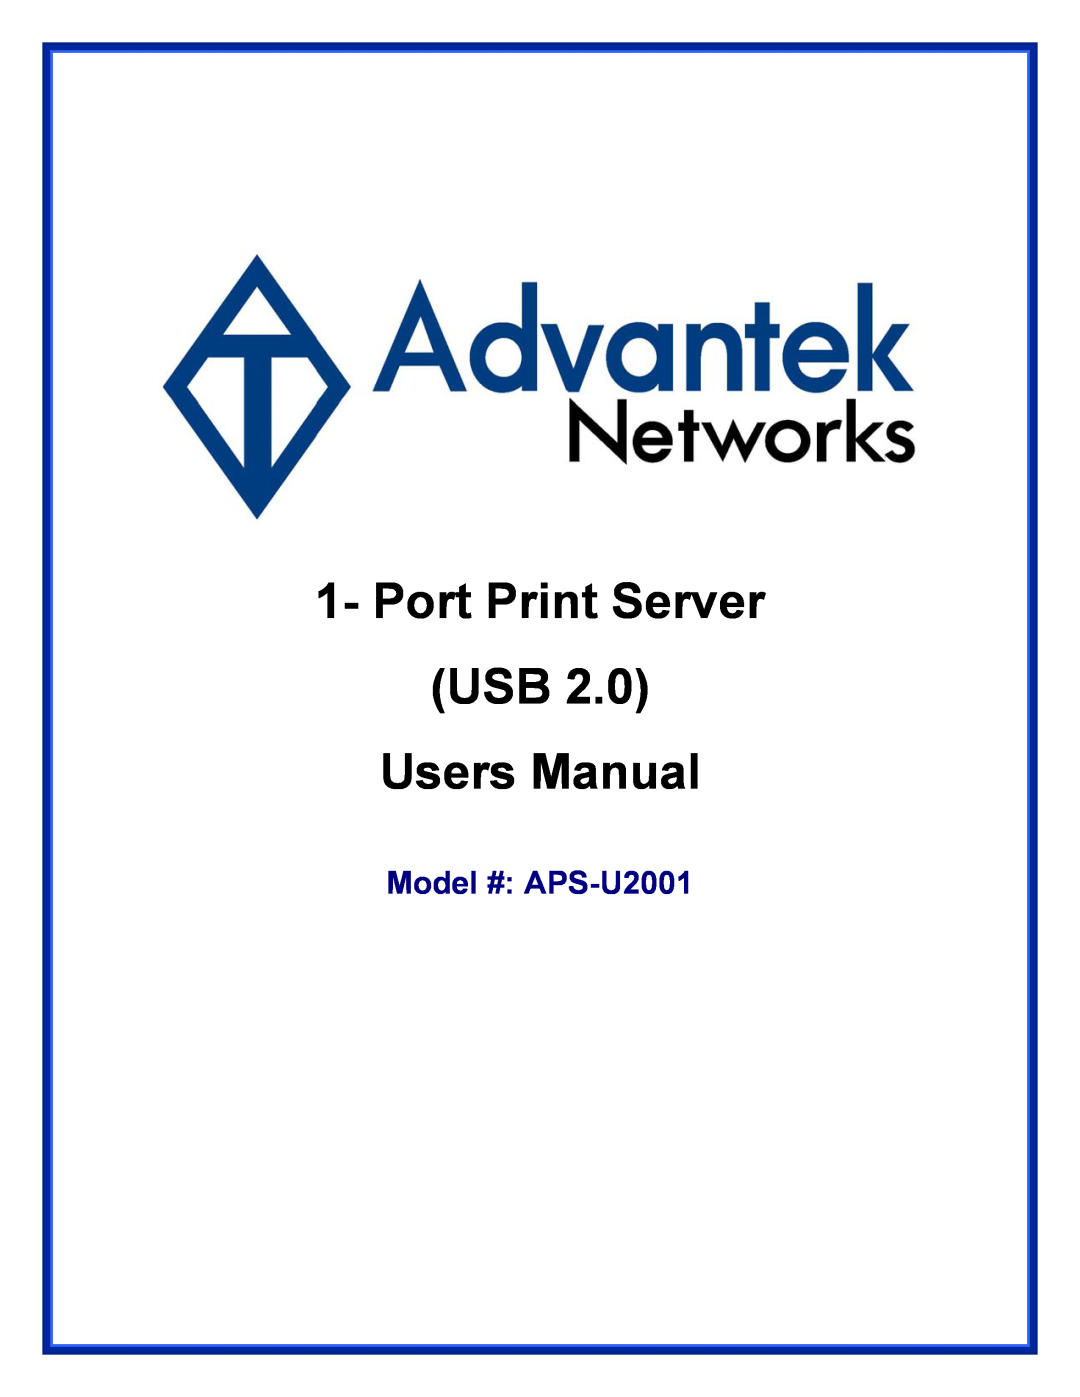 Epson (USB 2.0) user manual Port Print Server, USB Users Manual, Model # APS-U2001 